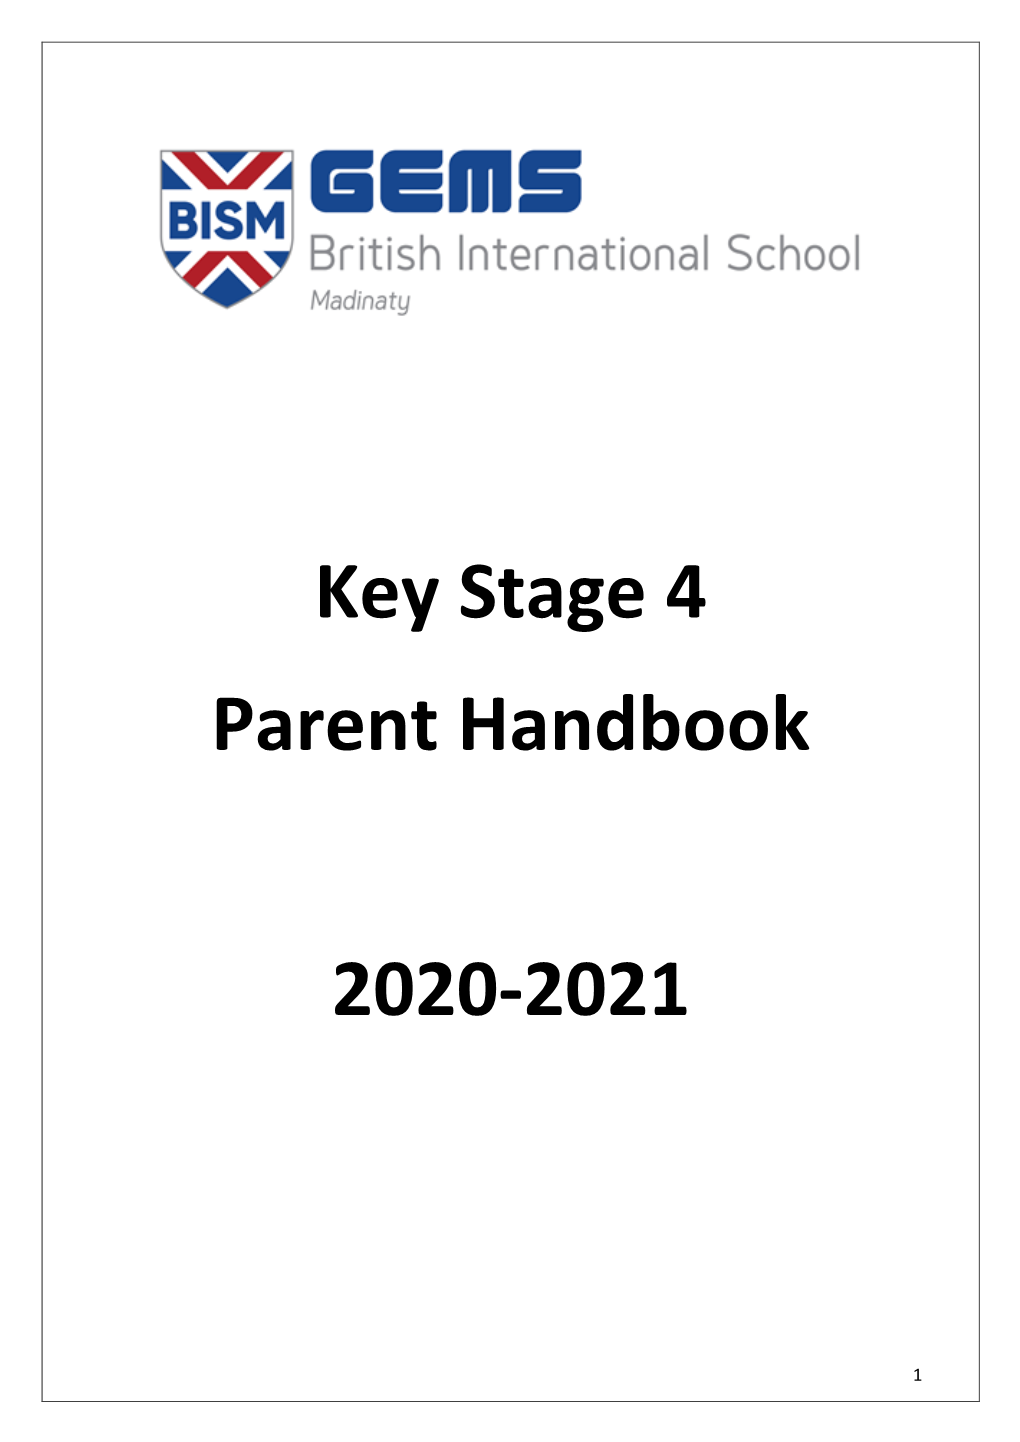 Key Stage 4 Parent Handbook 2020-2021